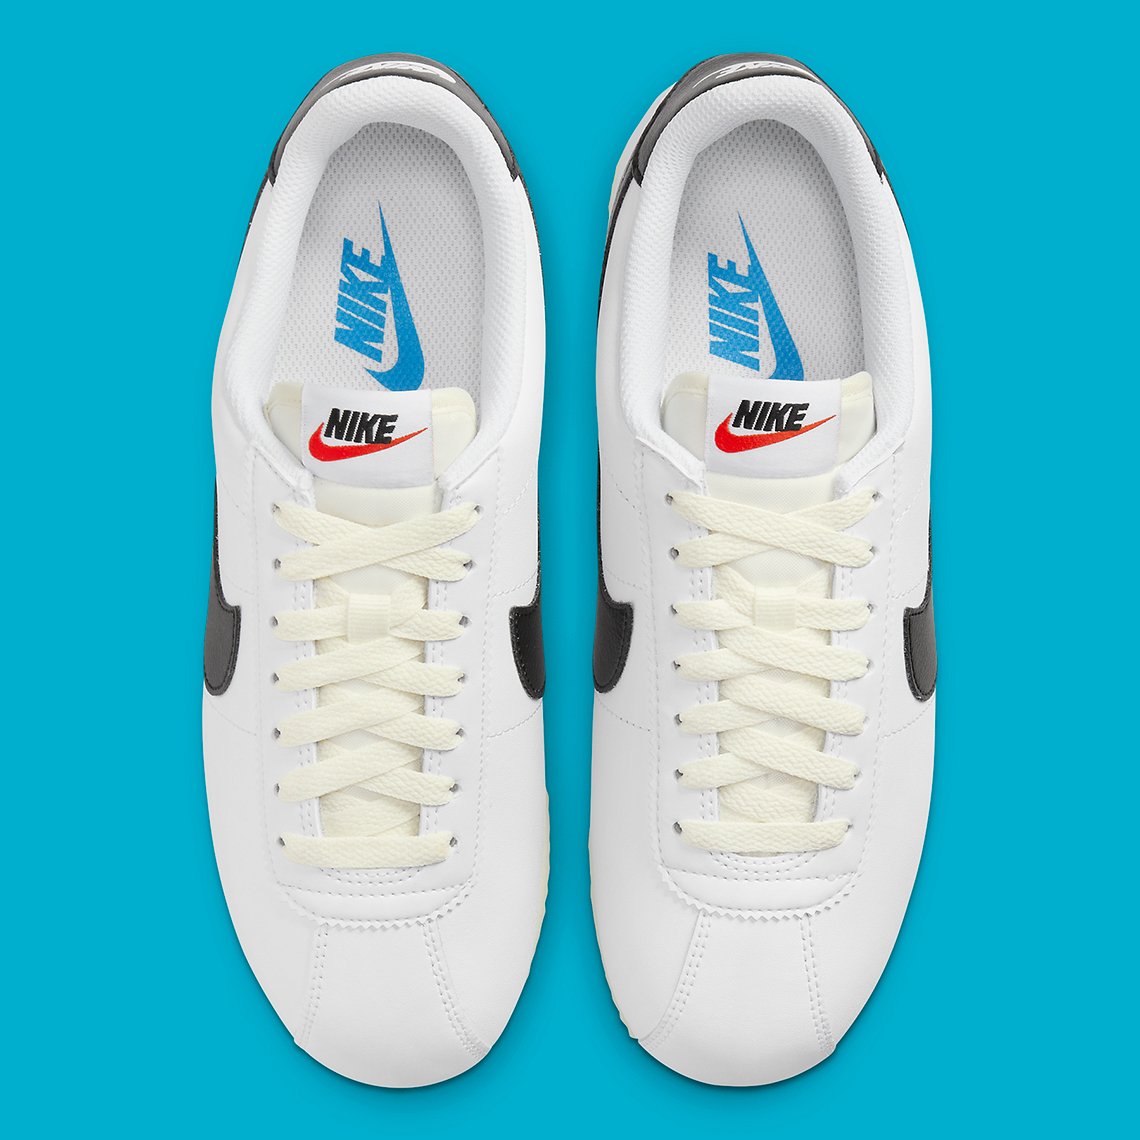 Nike Cortez "White/Black/Light Blue" DN1791-100 | SneakerNews.com